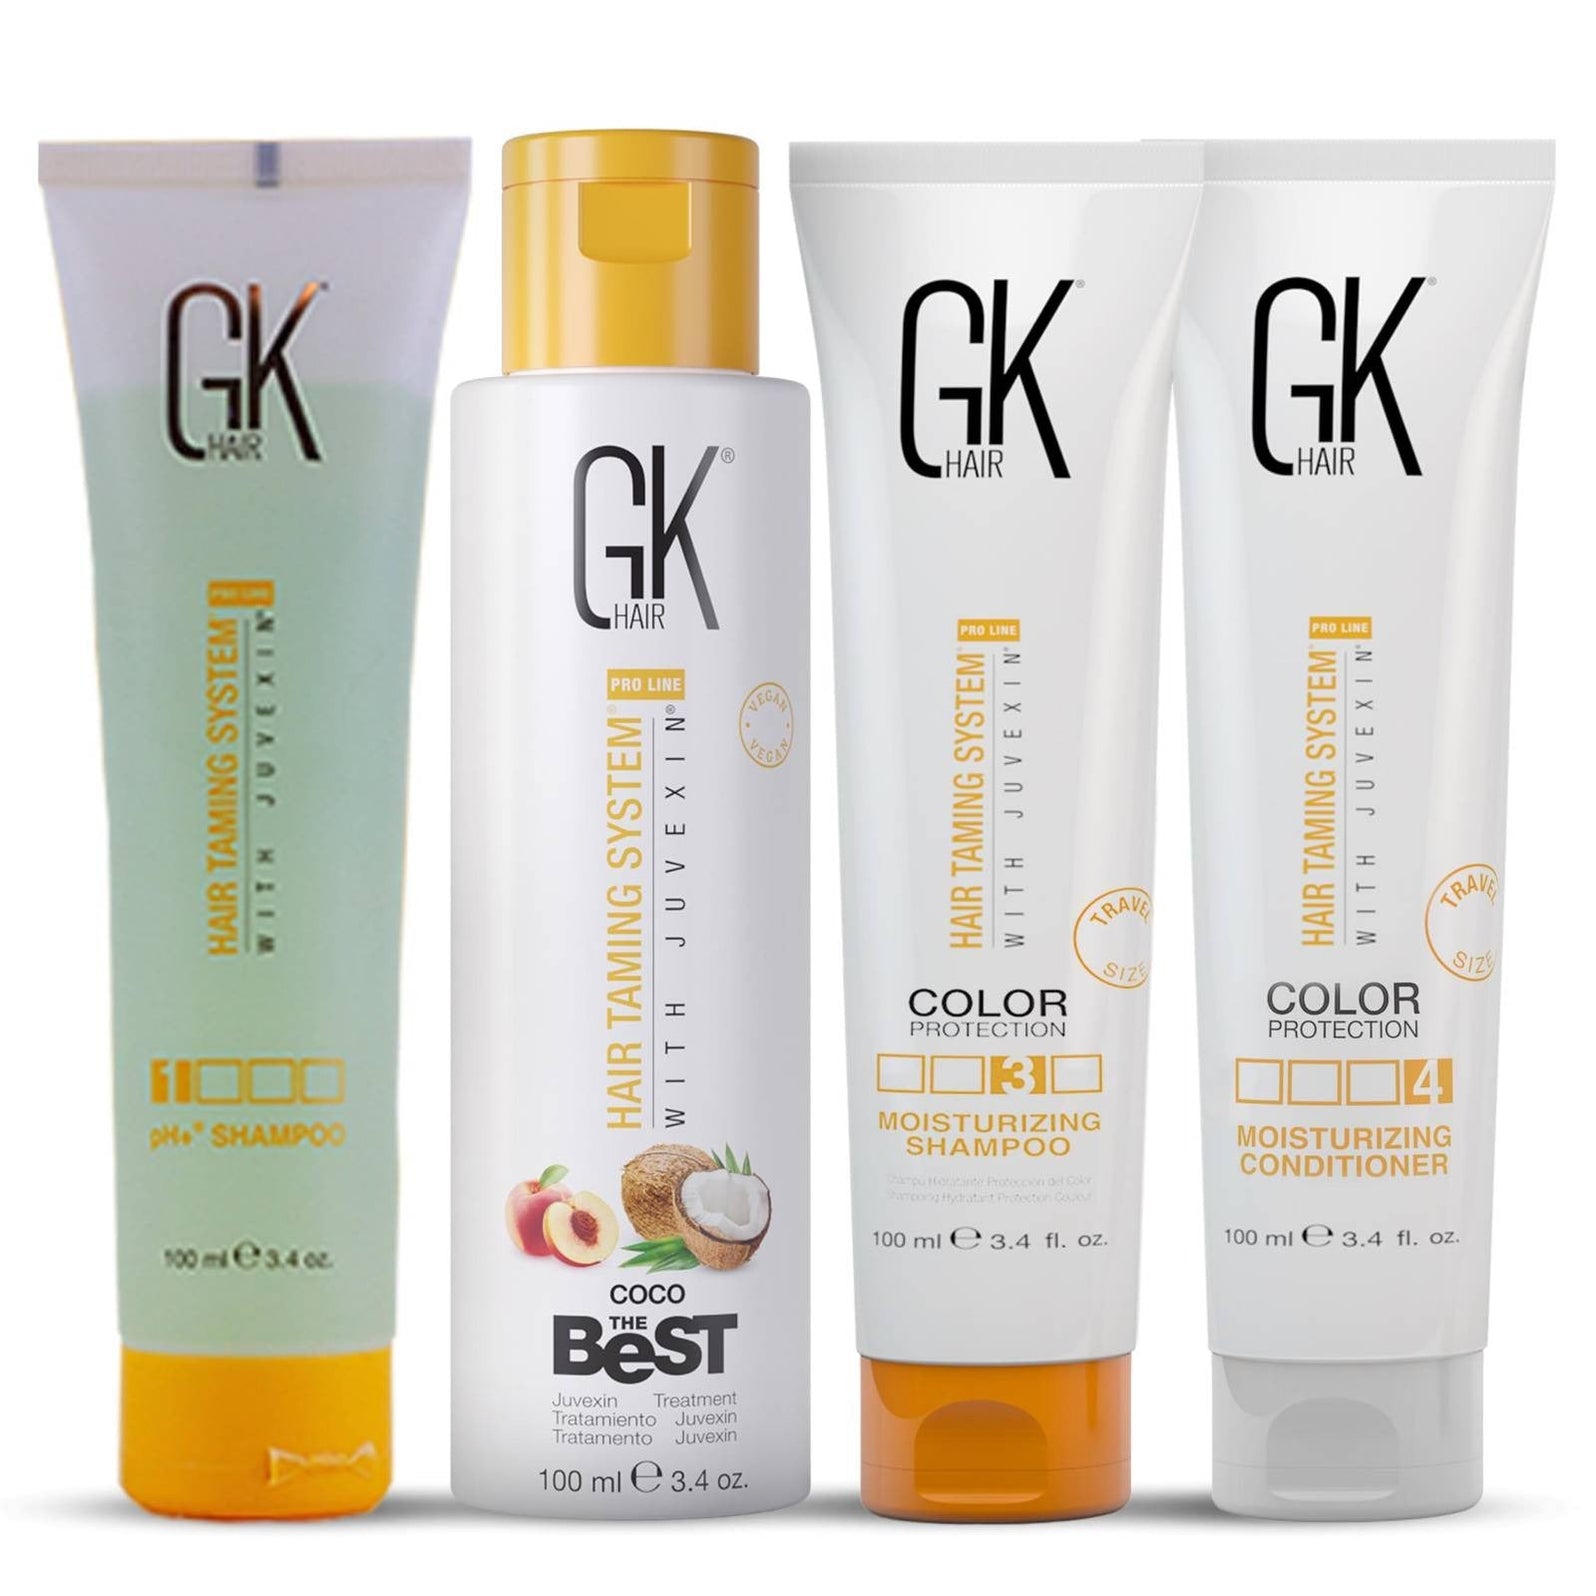 Global Keratin Official Haircare Online Store - GK Hair UK